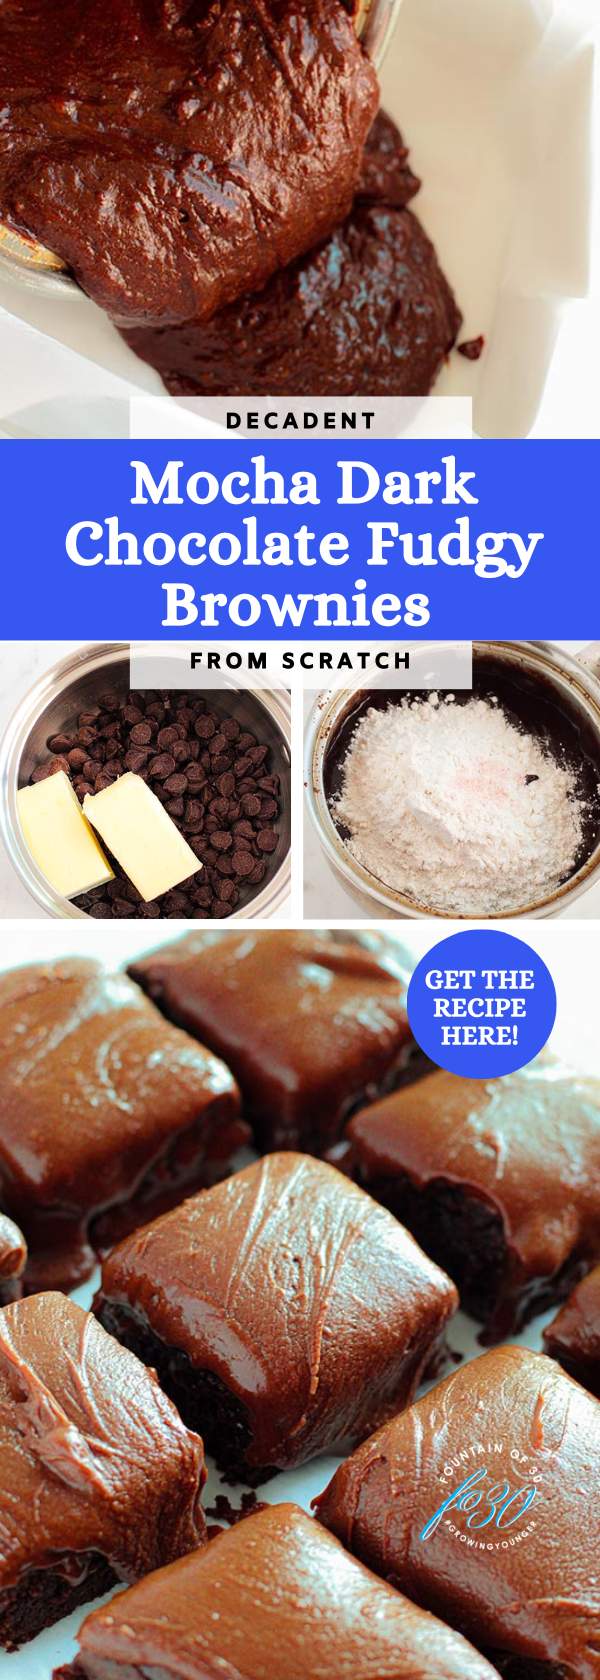 dark chocolate fudge brownies and frosting recipe fountainof30